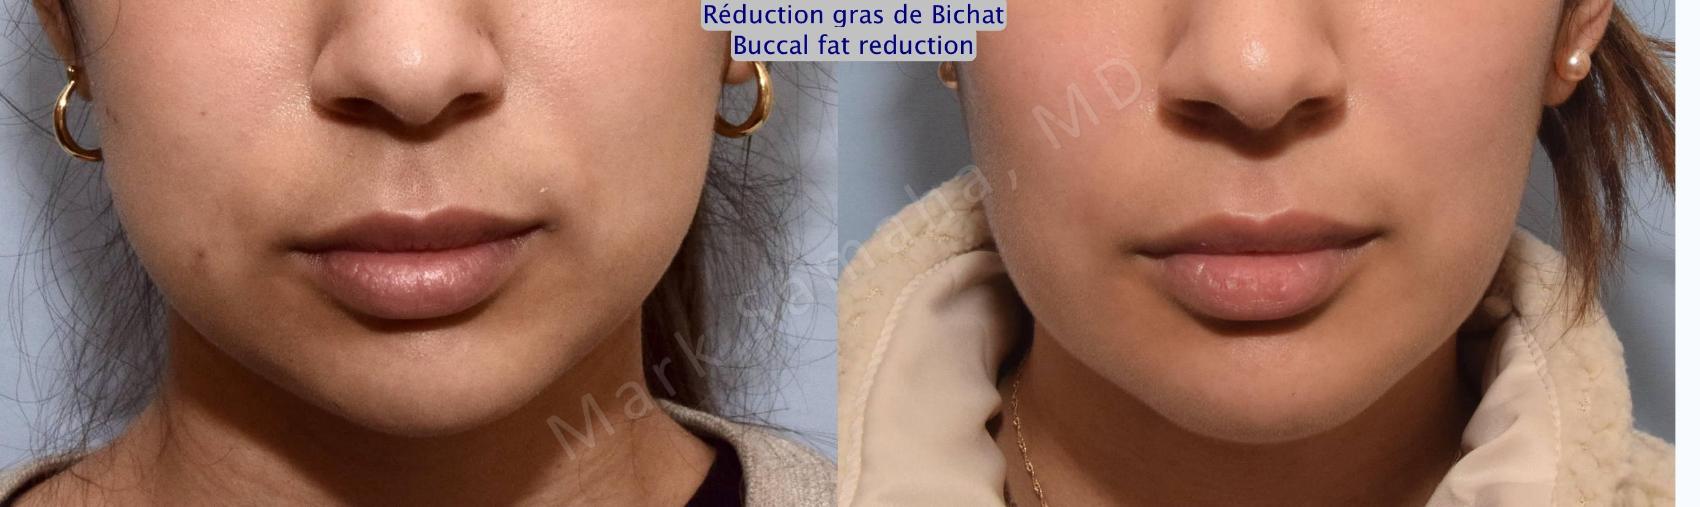 Before & After Réduction des Boules de Bichat / Buccal Fat Removal Case 157 Front View in Montreal, QC